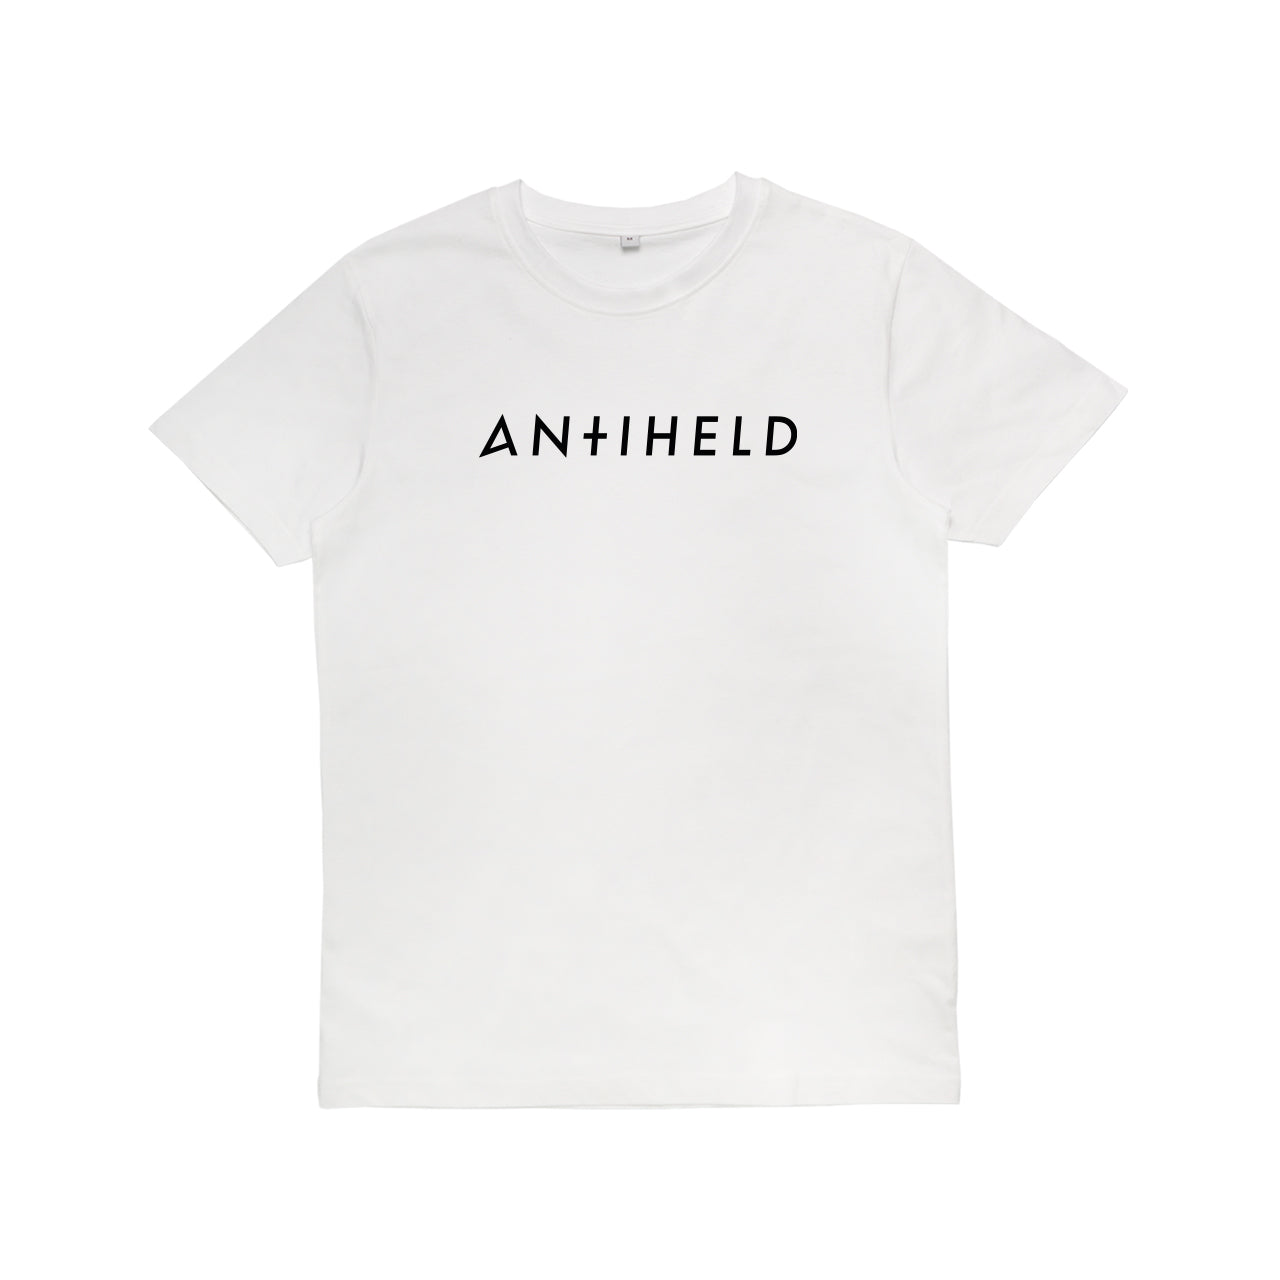 Antiheld - Basic Shirt